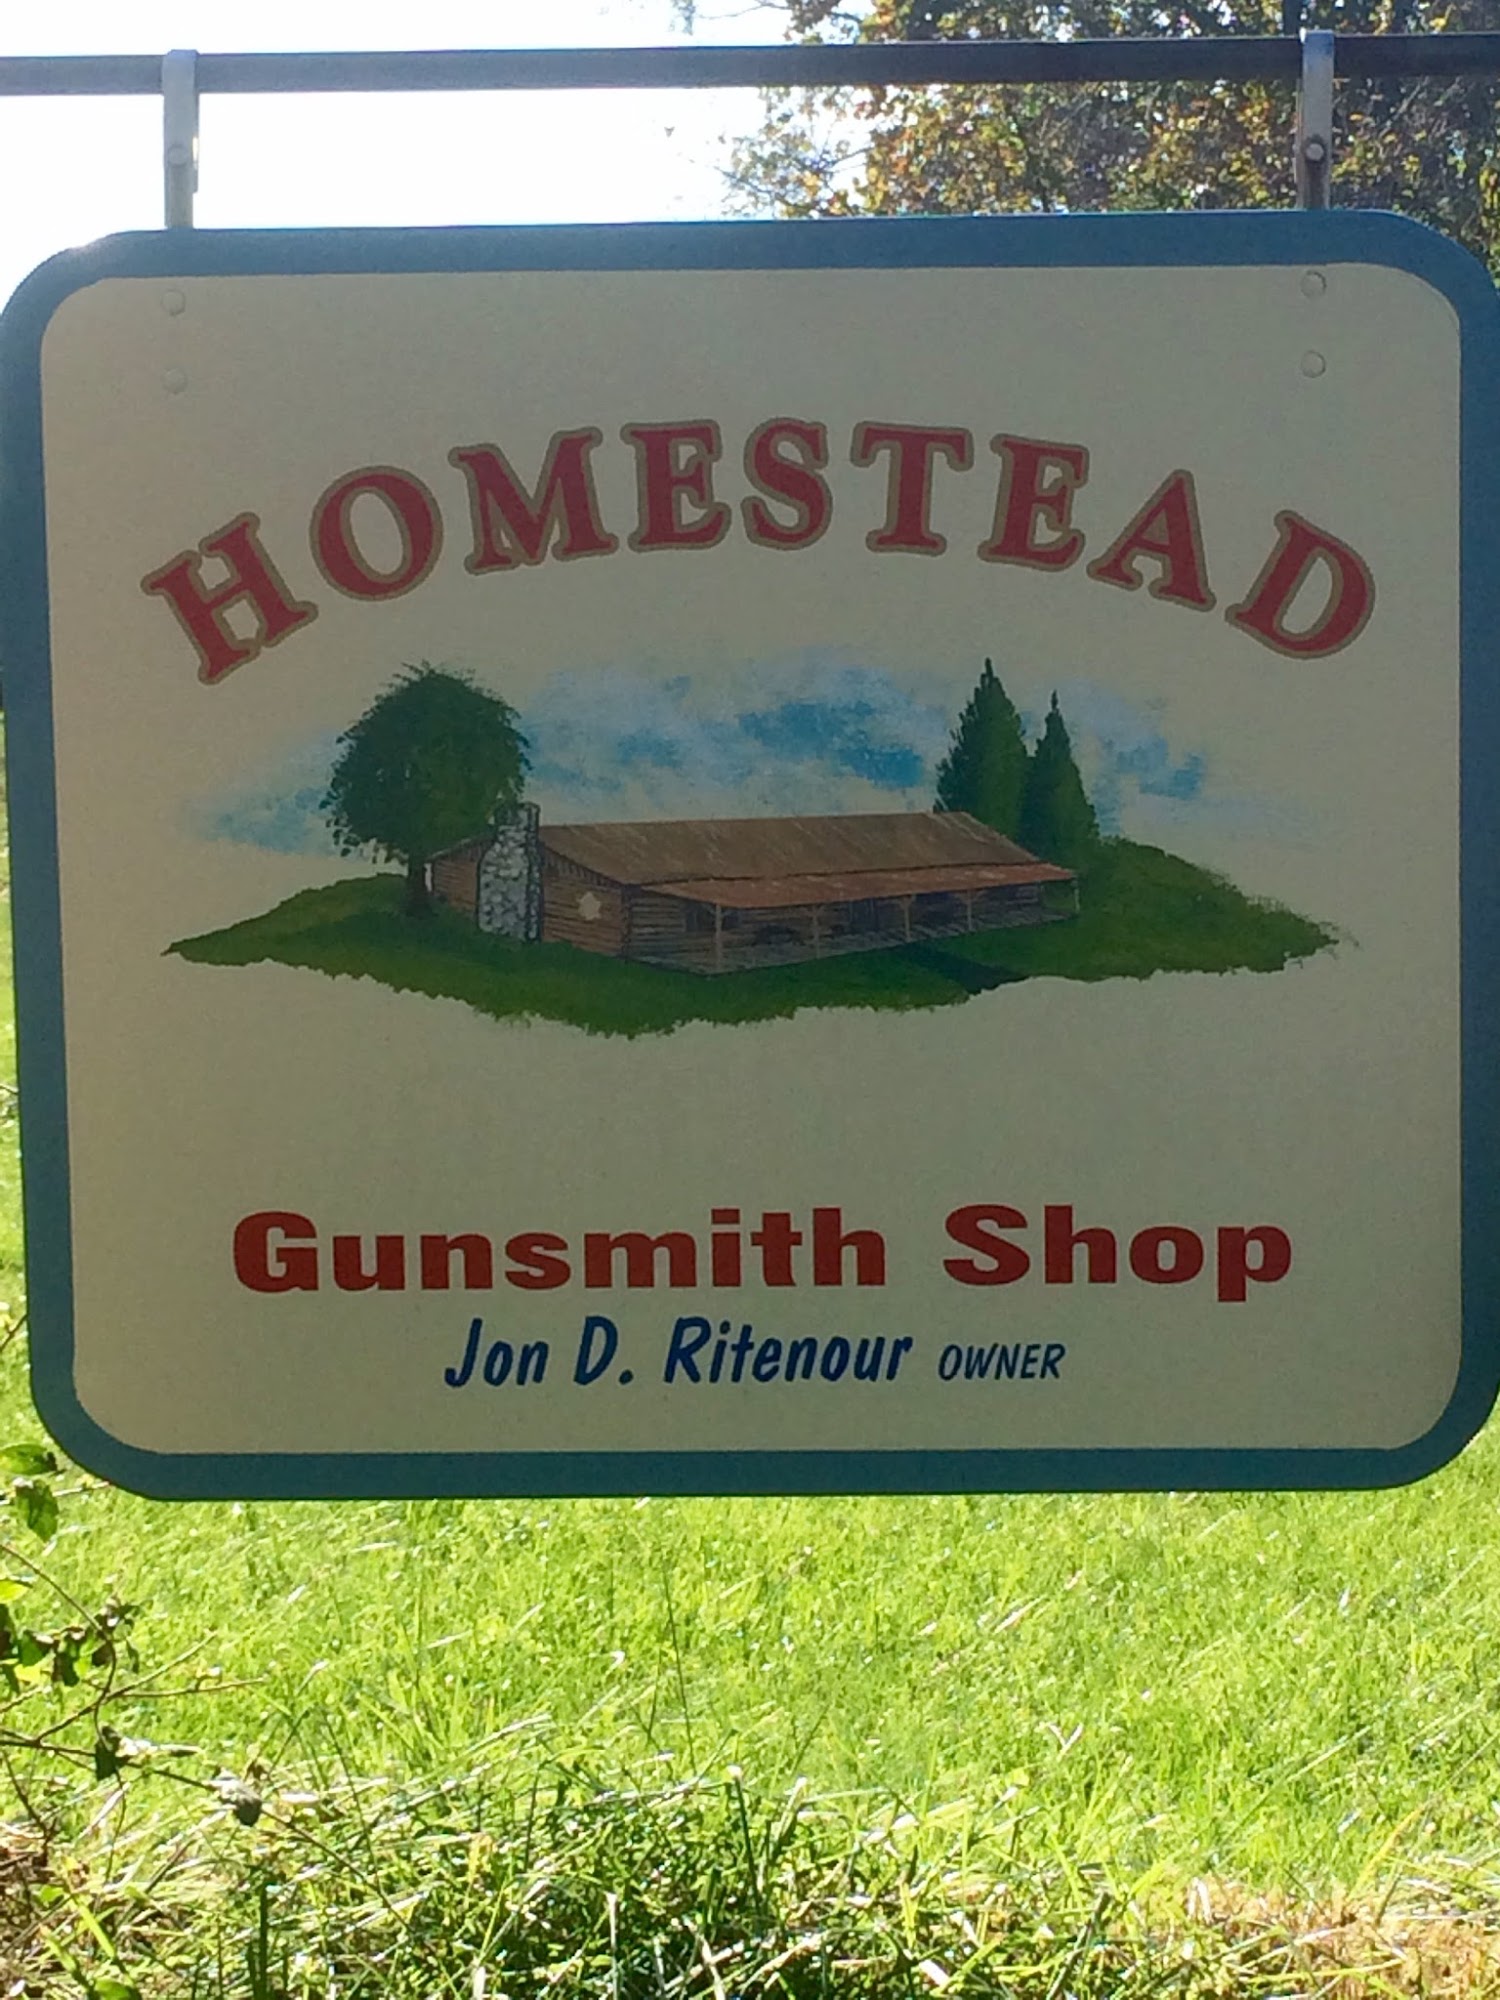 Homestead Gunsmith Shop